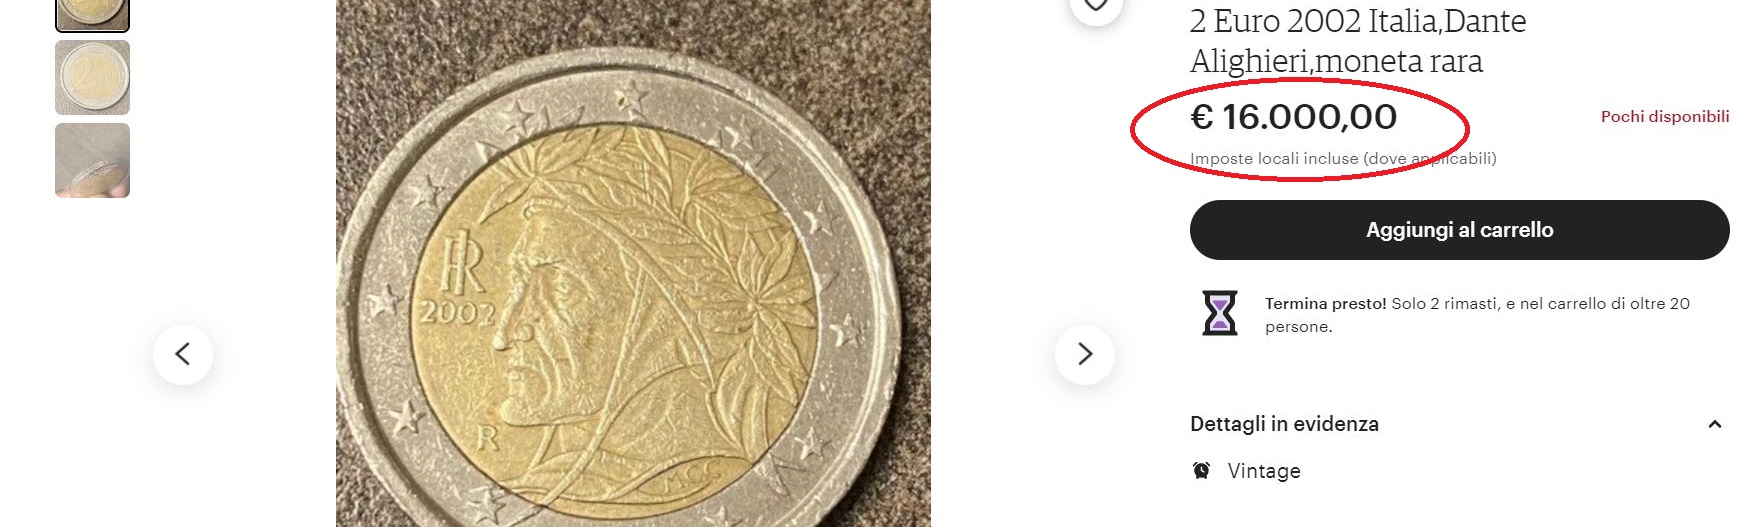 moneta dante rara valore 15 mila euro